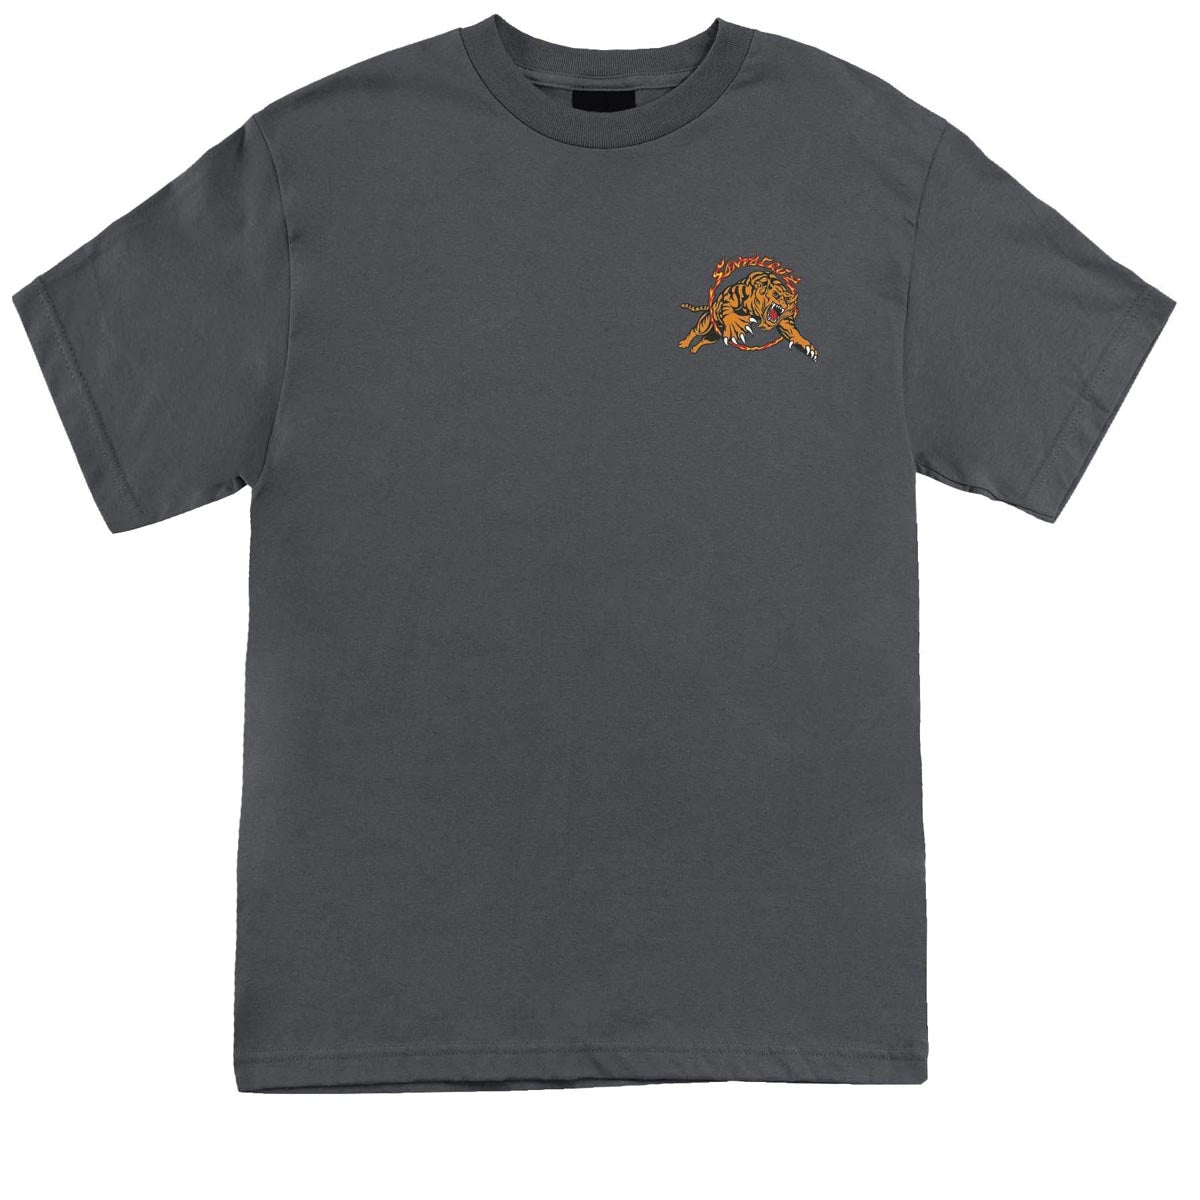 Santa Cruz Salba Tiger Redux T-Shirt - Charcoal image 2